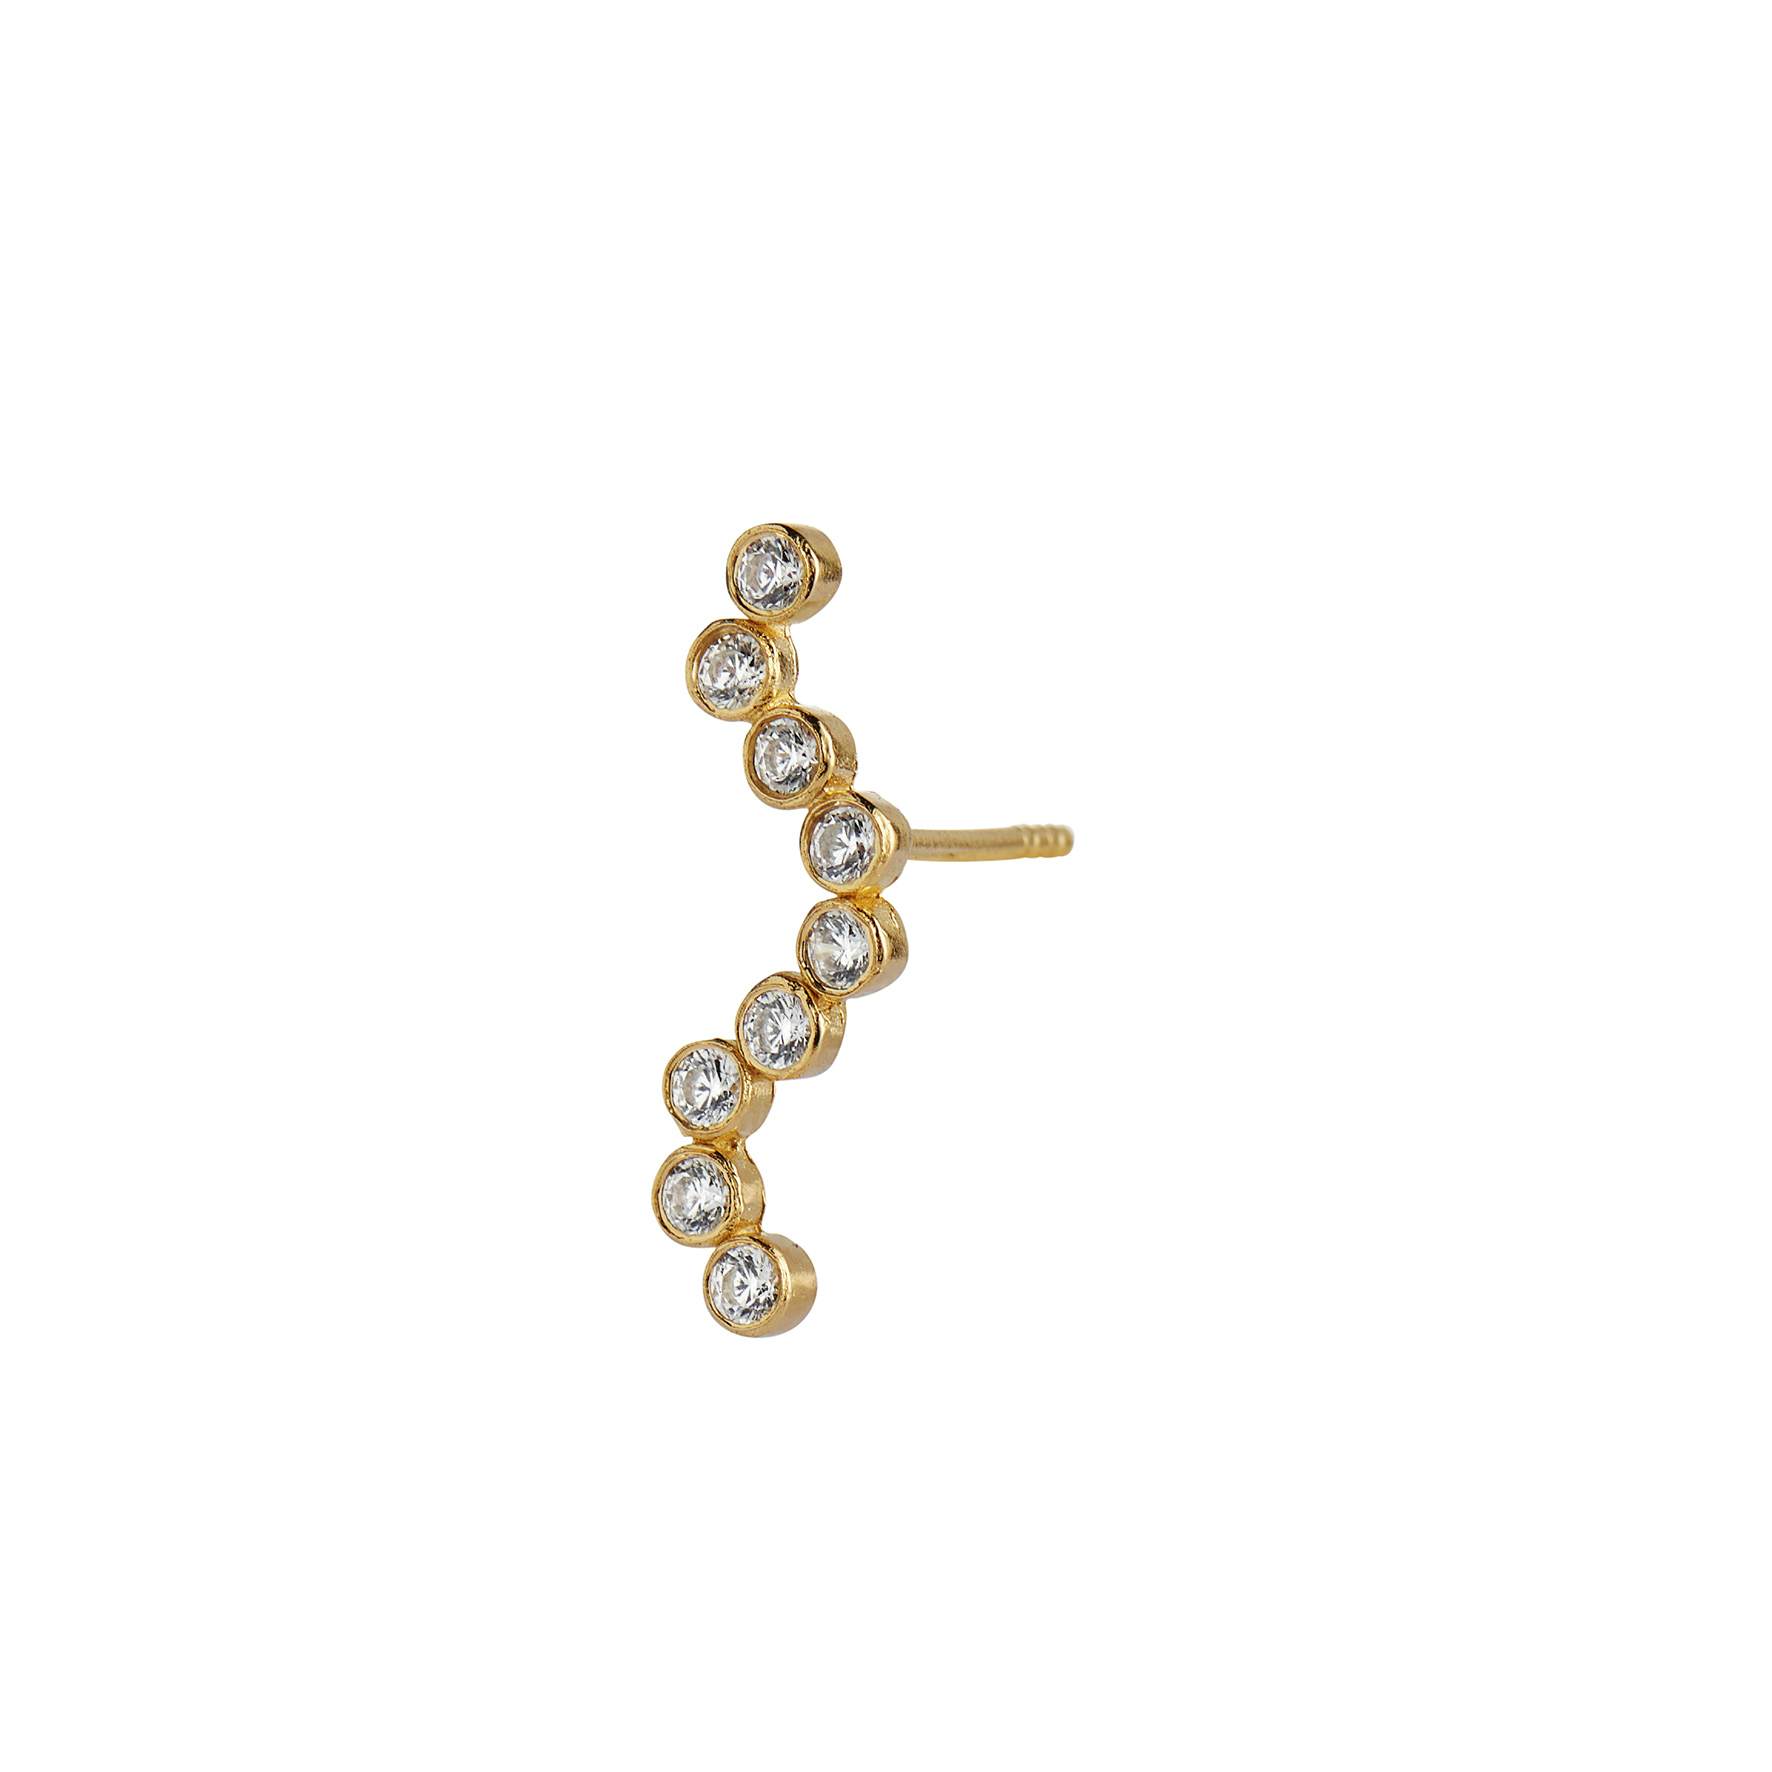 Midnight Sparkle Earring - Right von STINE A Jewelry in Vergoldet-Silber Sterling 925